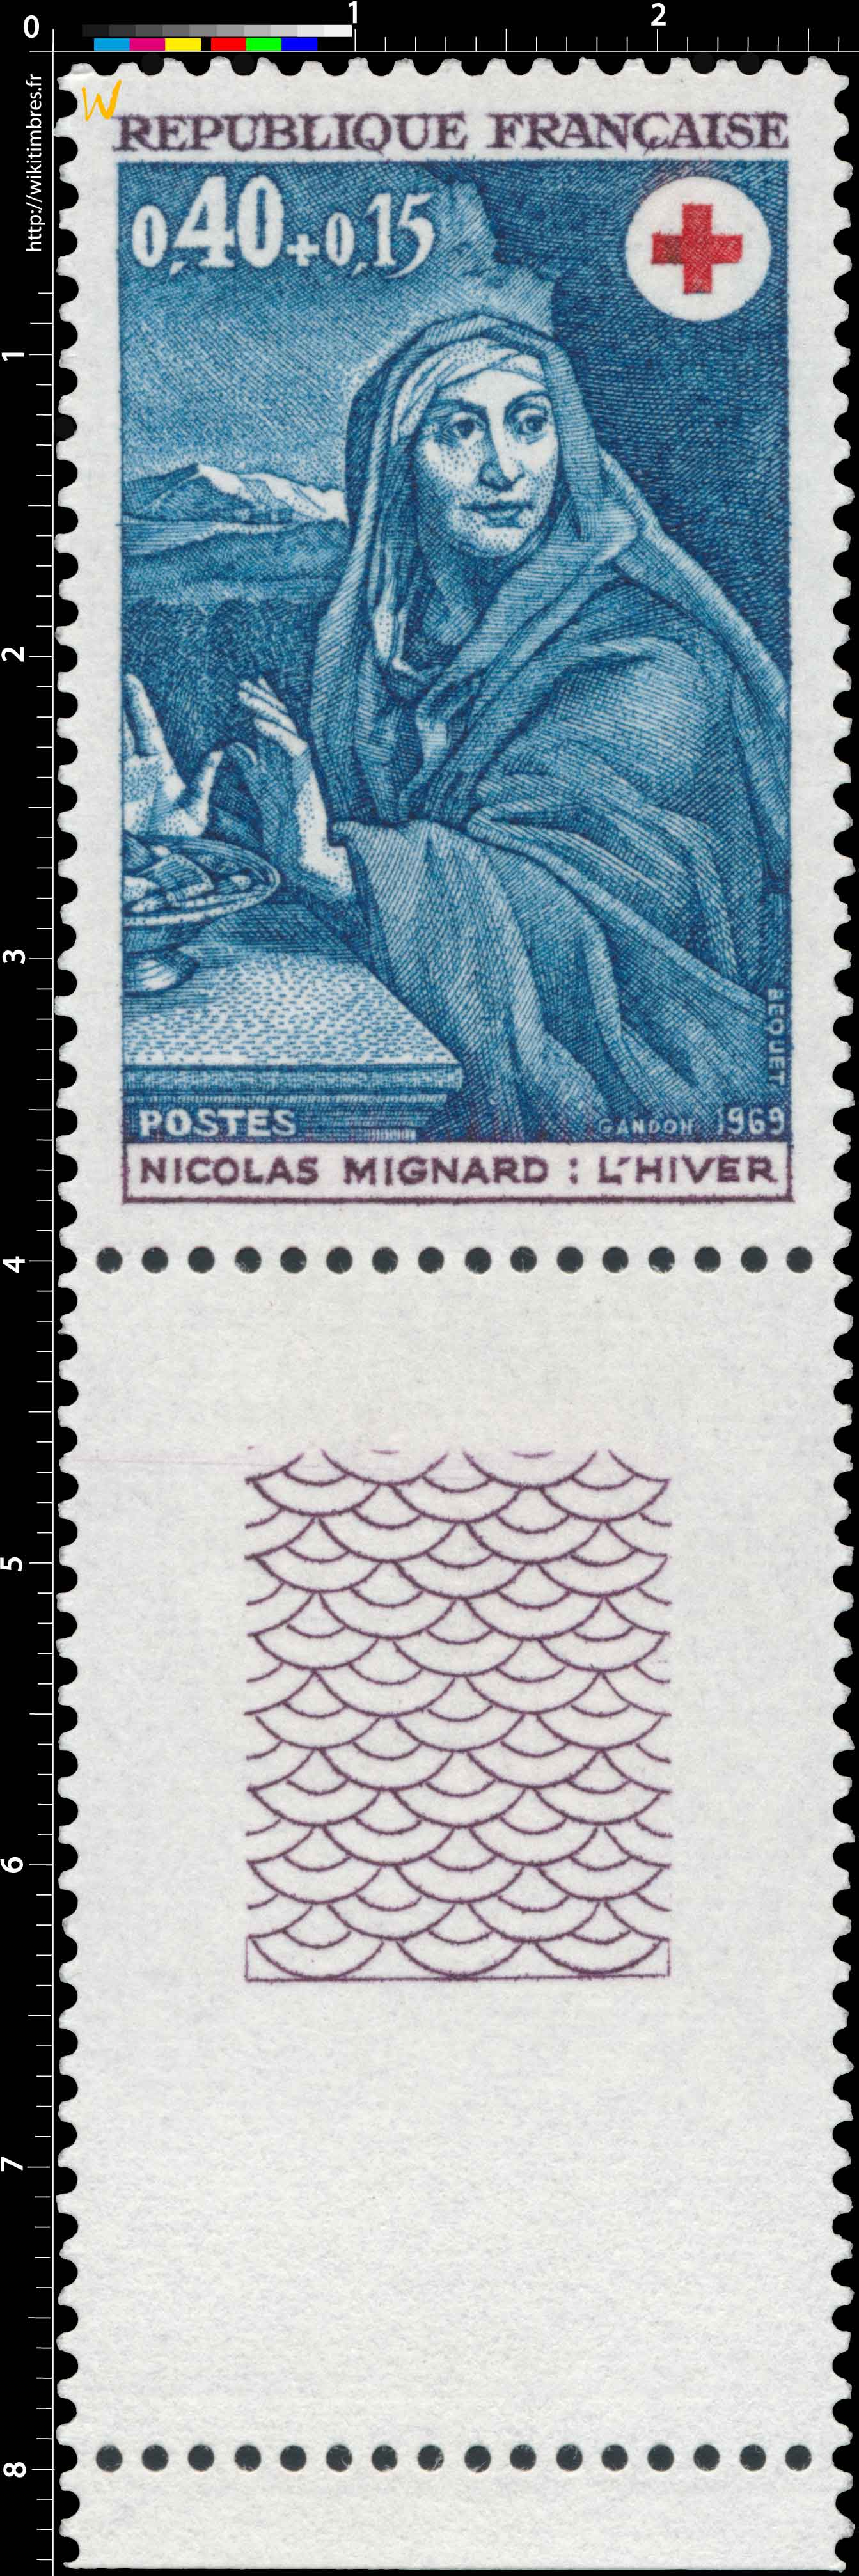 1969 NICOLAS MIGNARD : L'HIVER